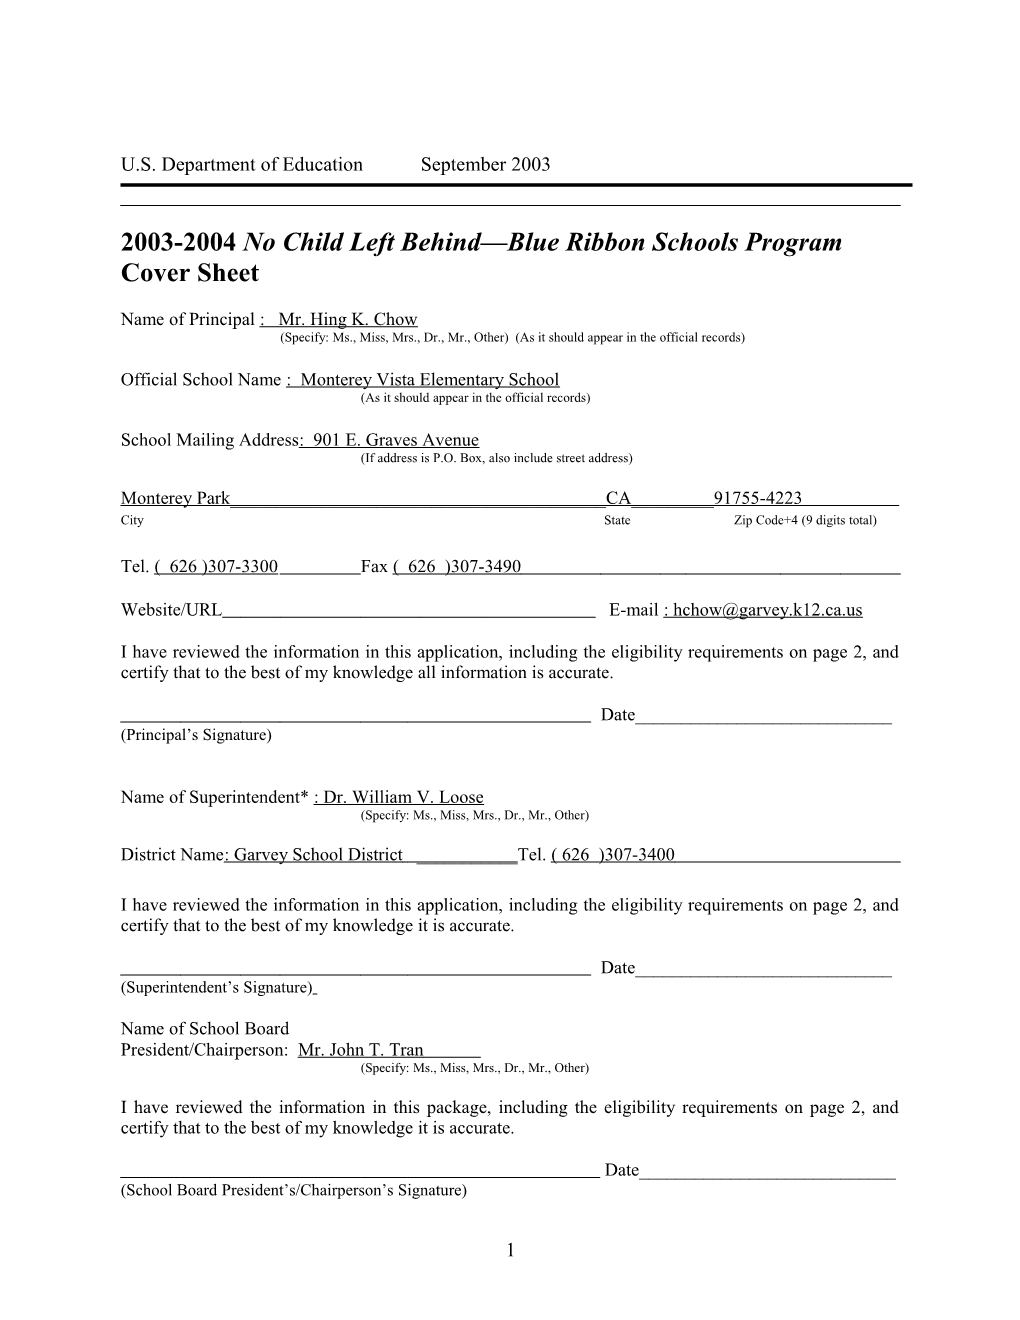 Monterey Vista Elementary School 2004 No Child Left Behind-Blue Ribbon School Application